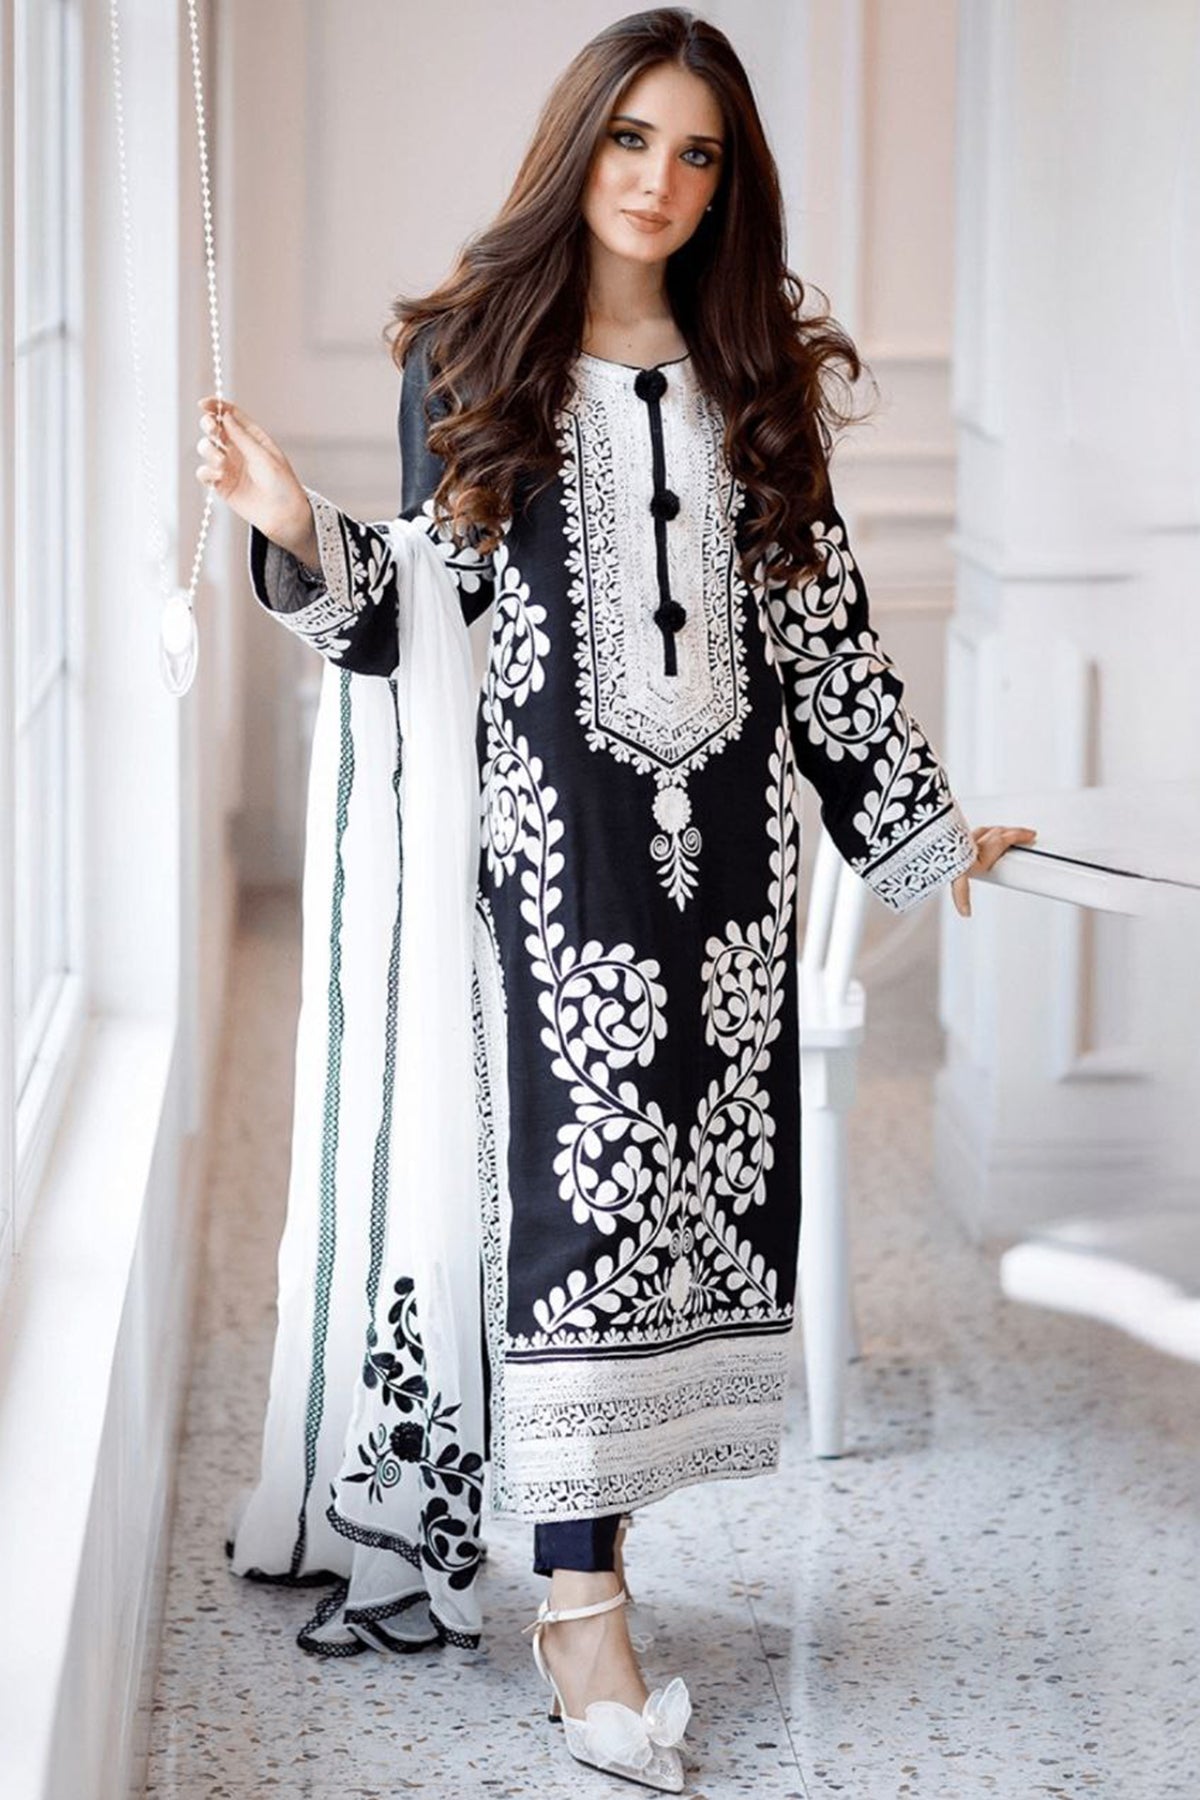 Pakistani Designer Wear Bridal Dress - White Embroidered Lehnga